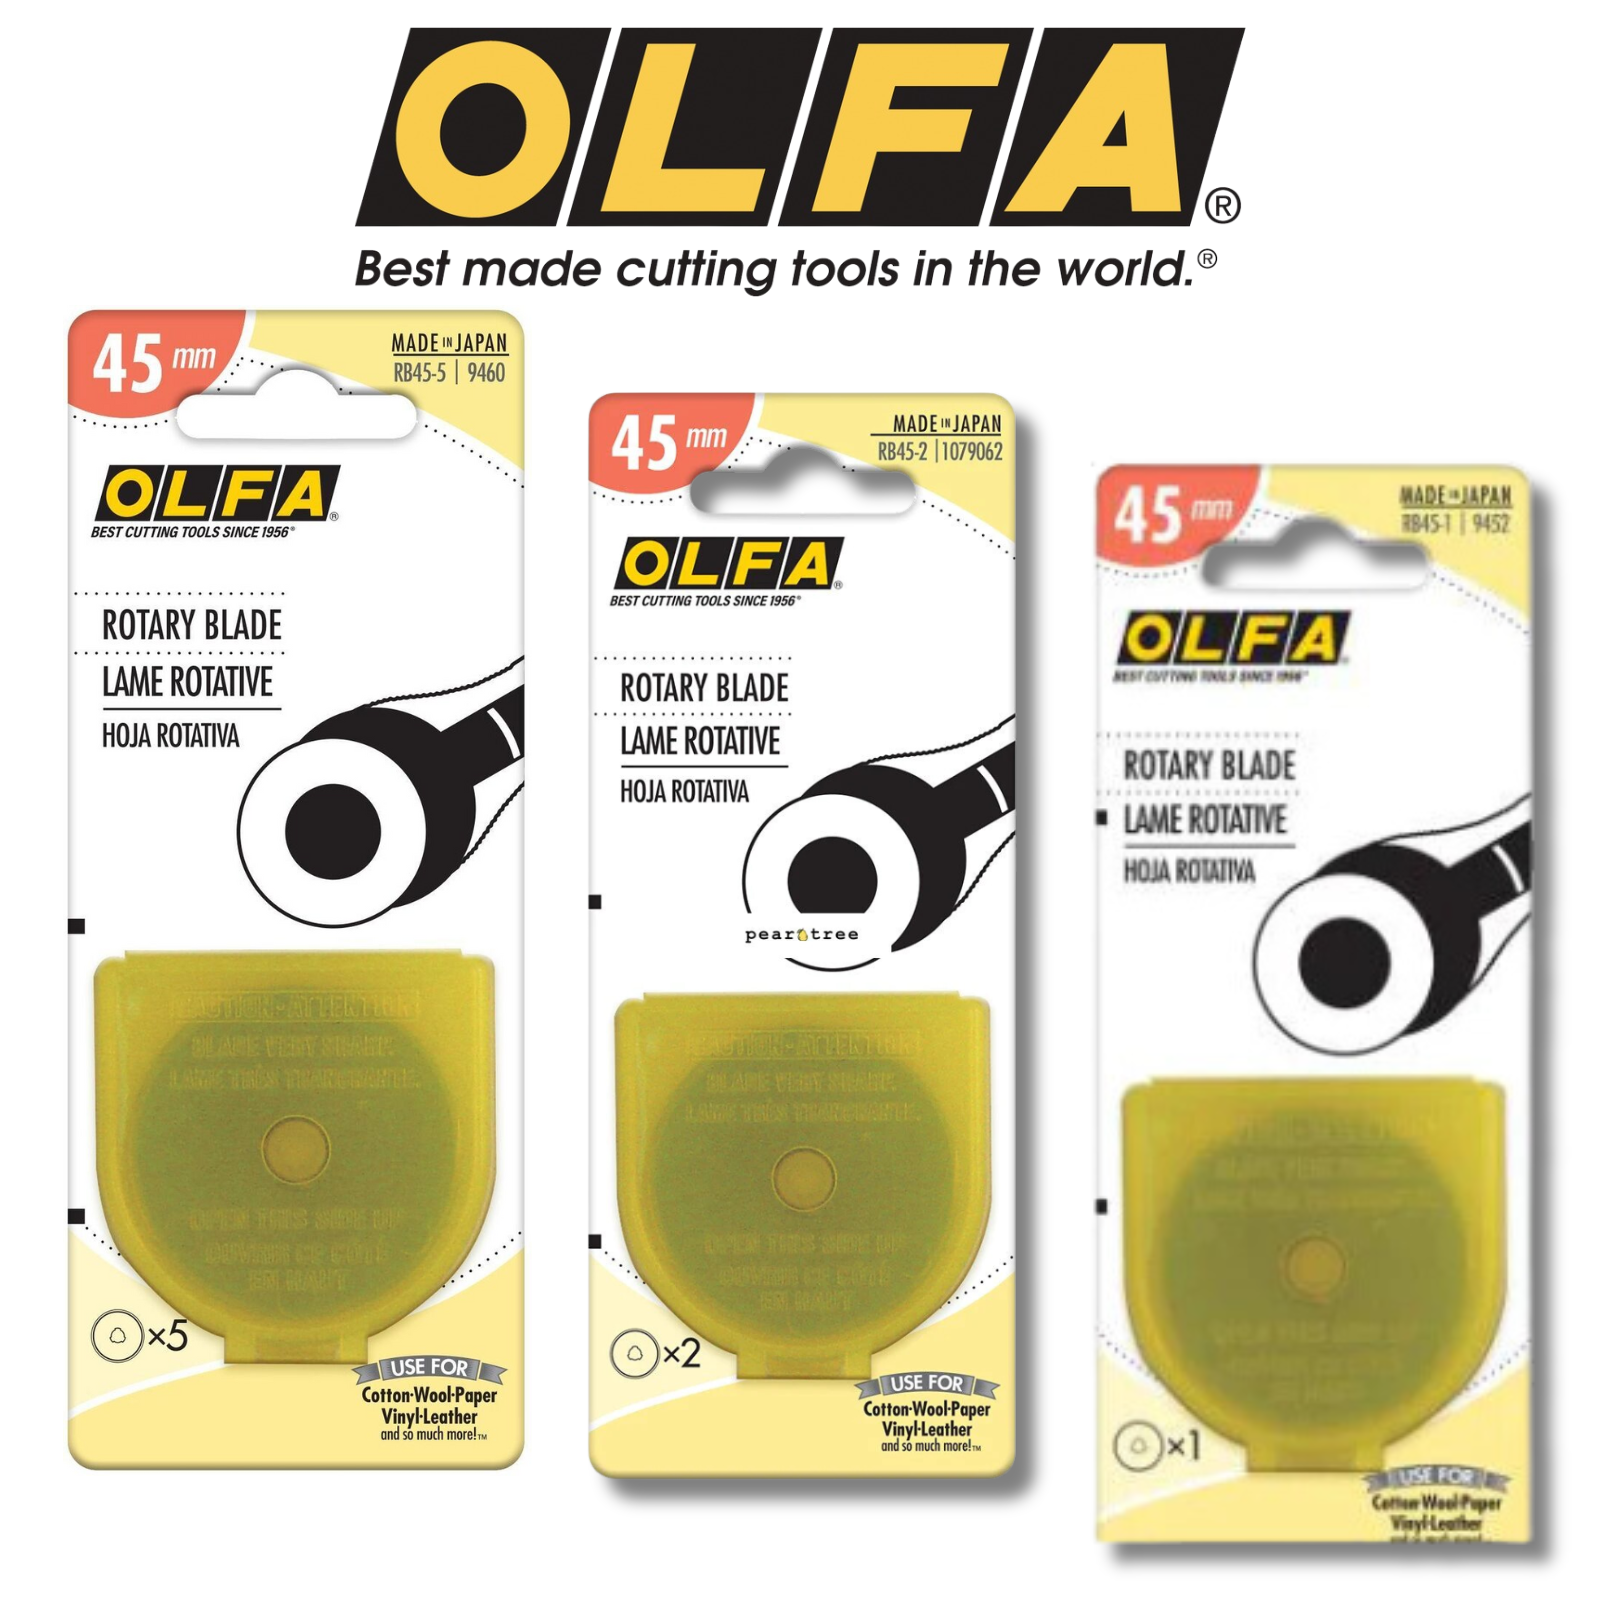 Olfa 45mm Rotary Cutter Replacement Blades - Tungsten Steel, Razor Edge